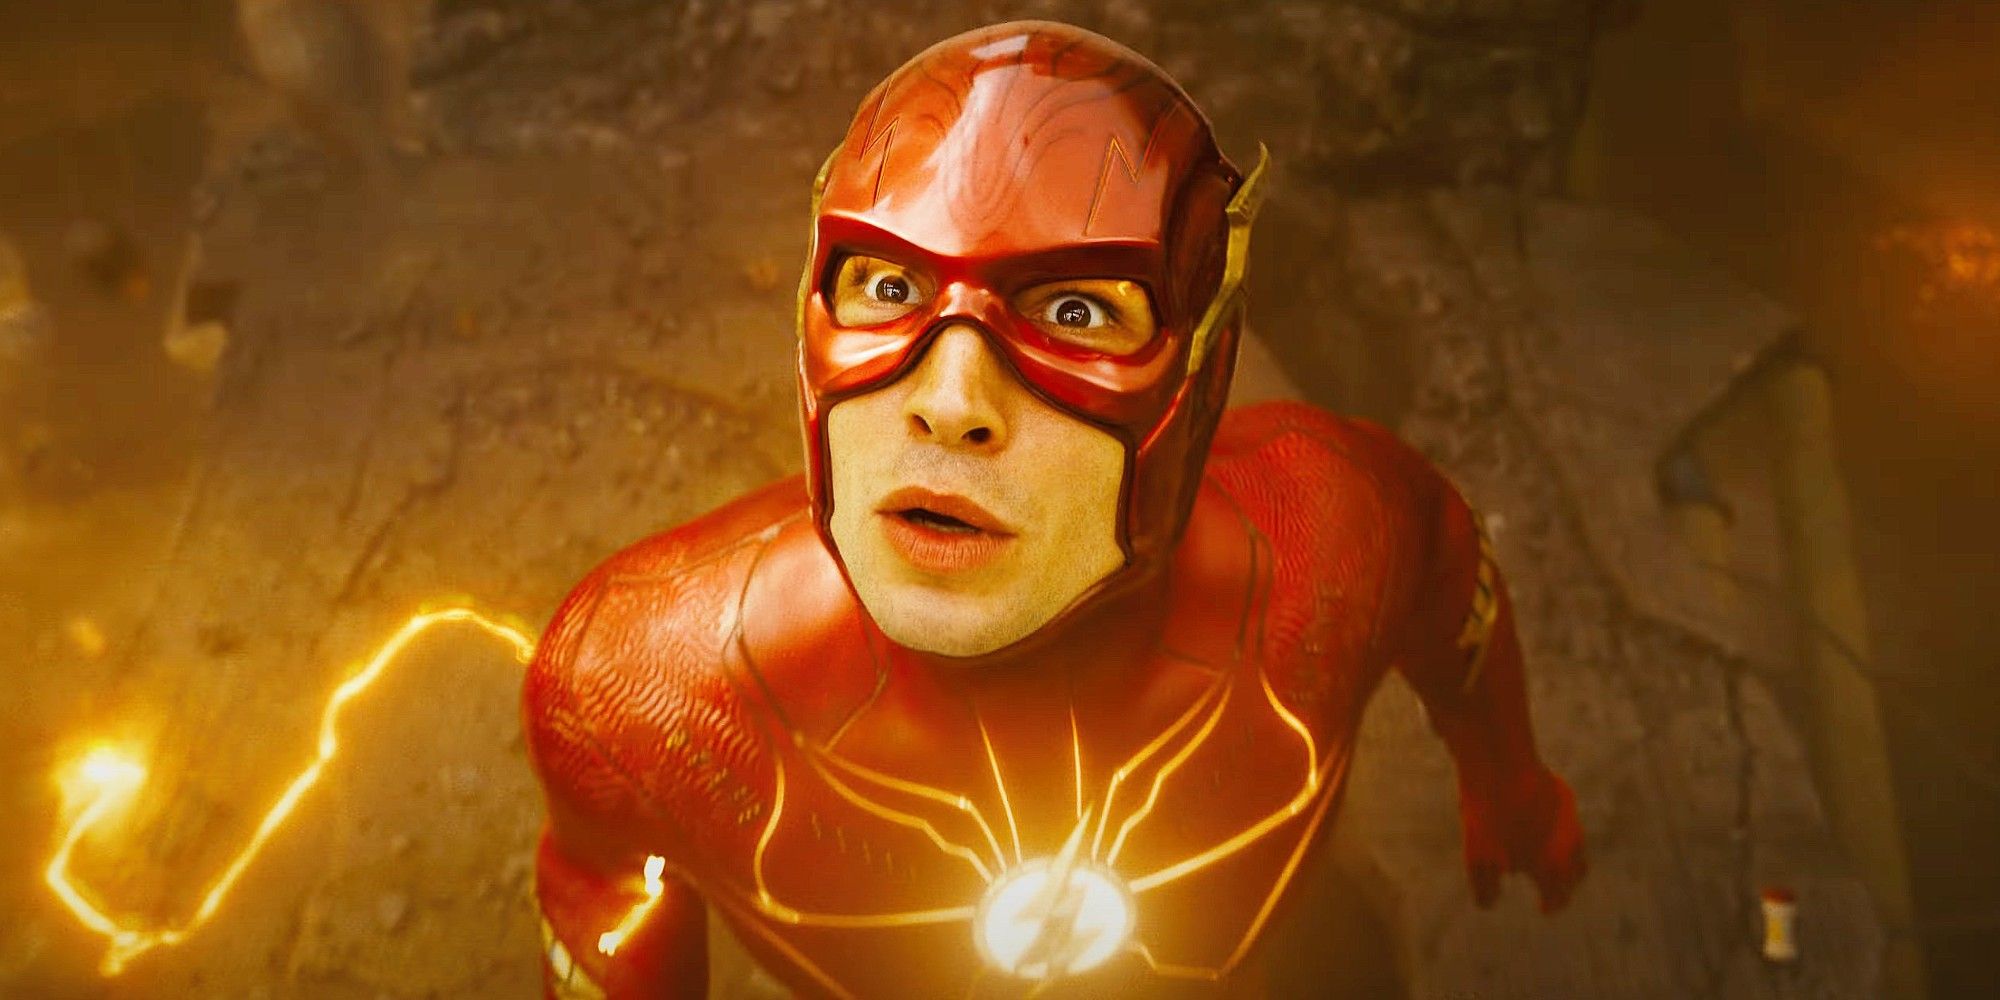 Ezra Miller as Barry Allen Looking Up in The Flash Movie